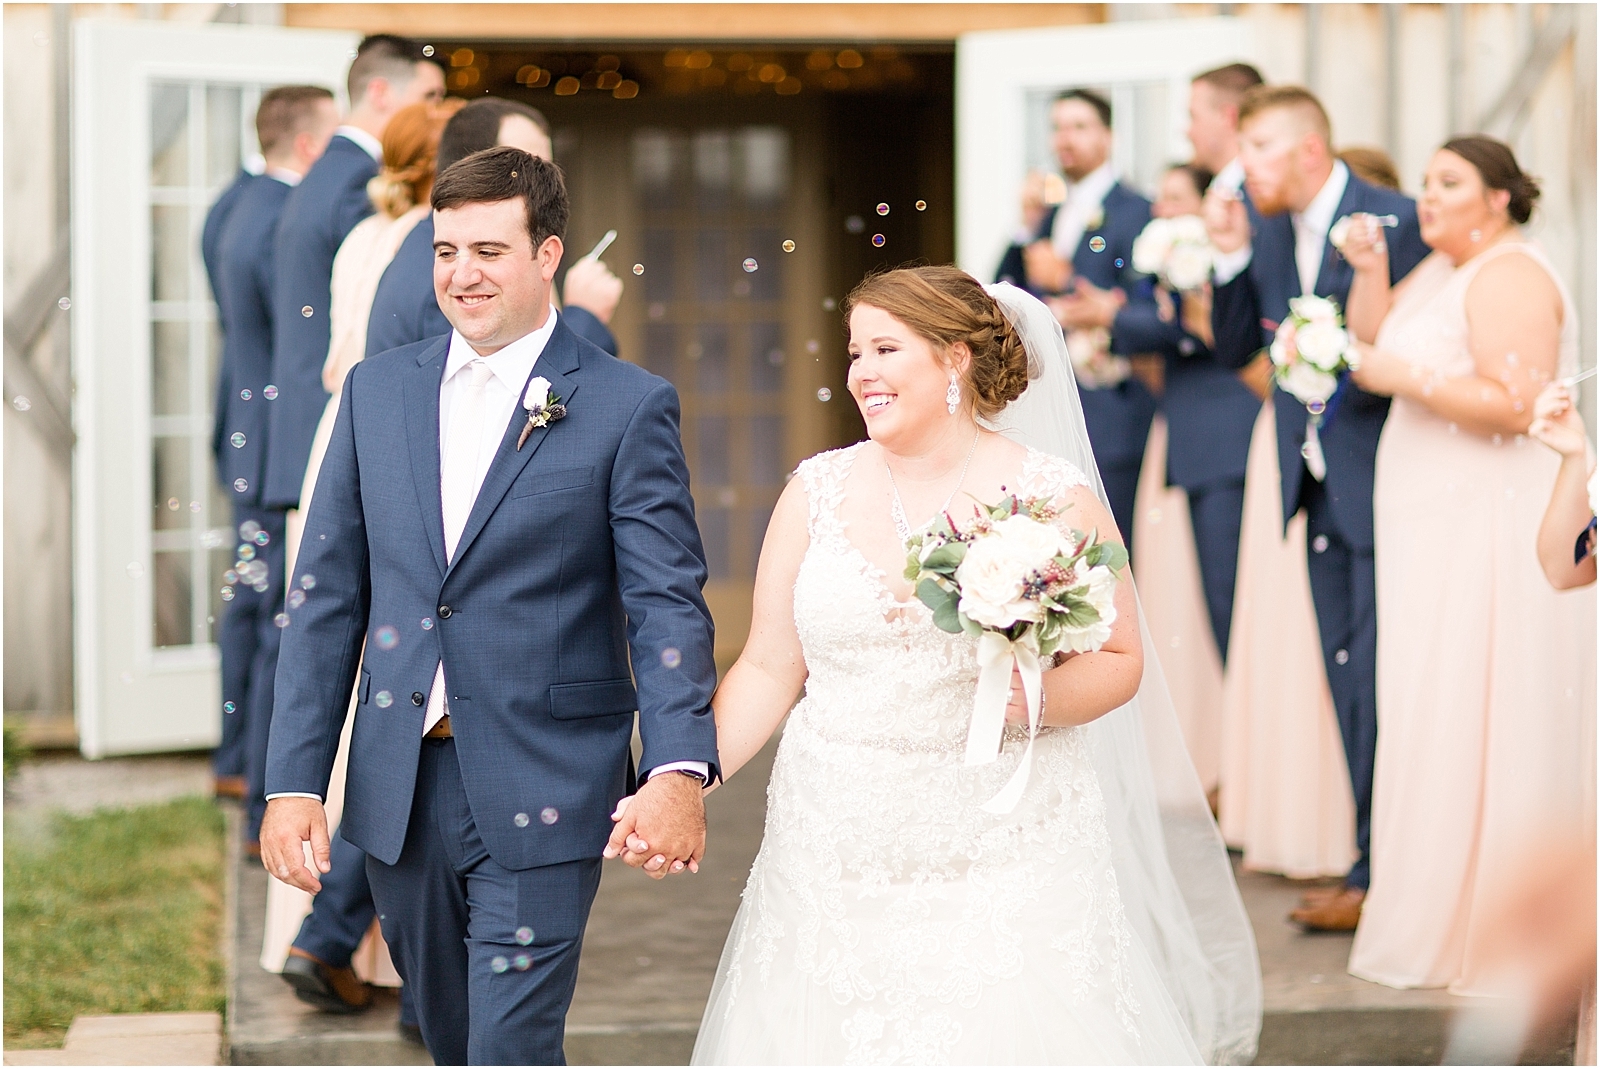 Rachel and Michael | Bret and Brandie Photography | Evansville Wedding Photographers 0069.jpg